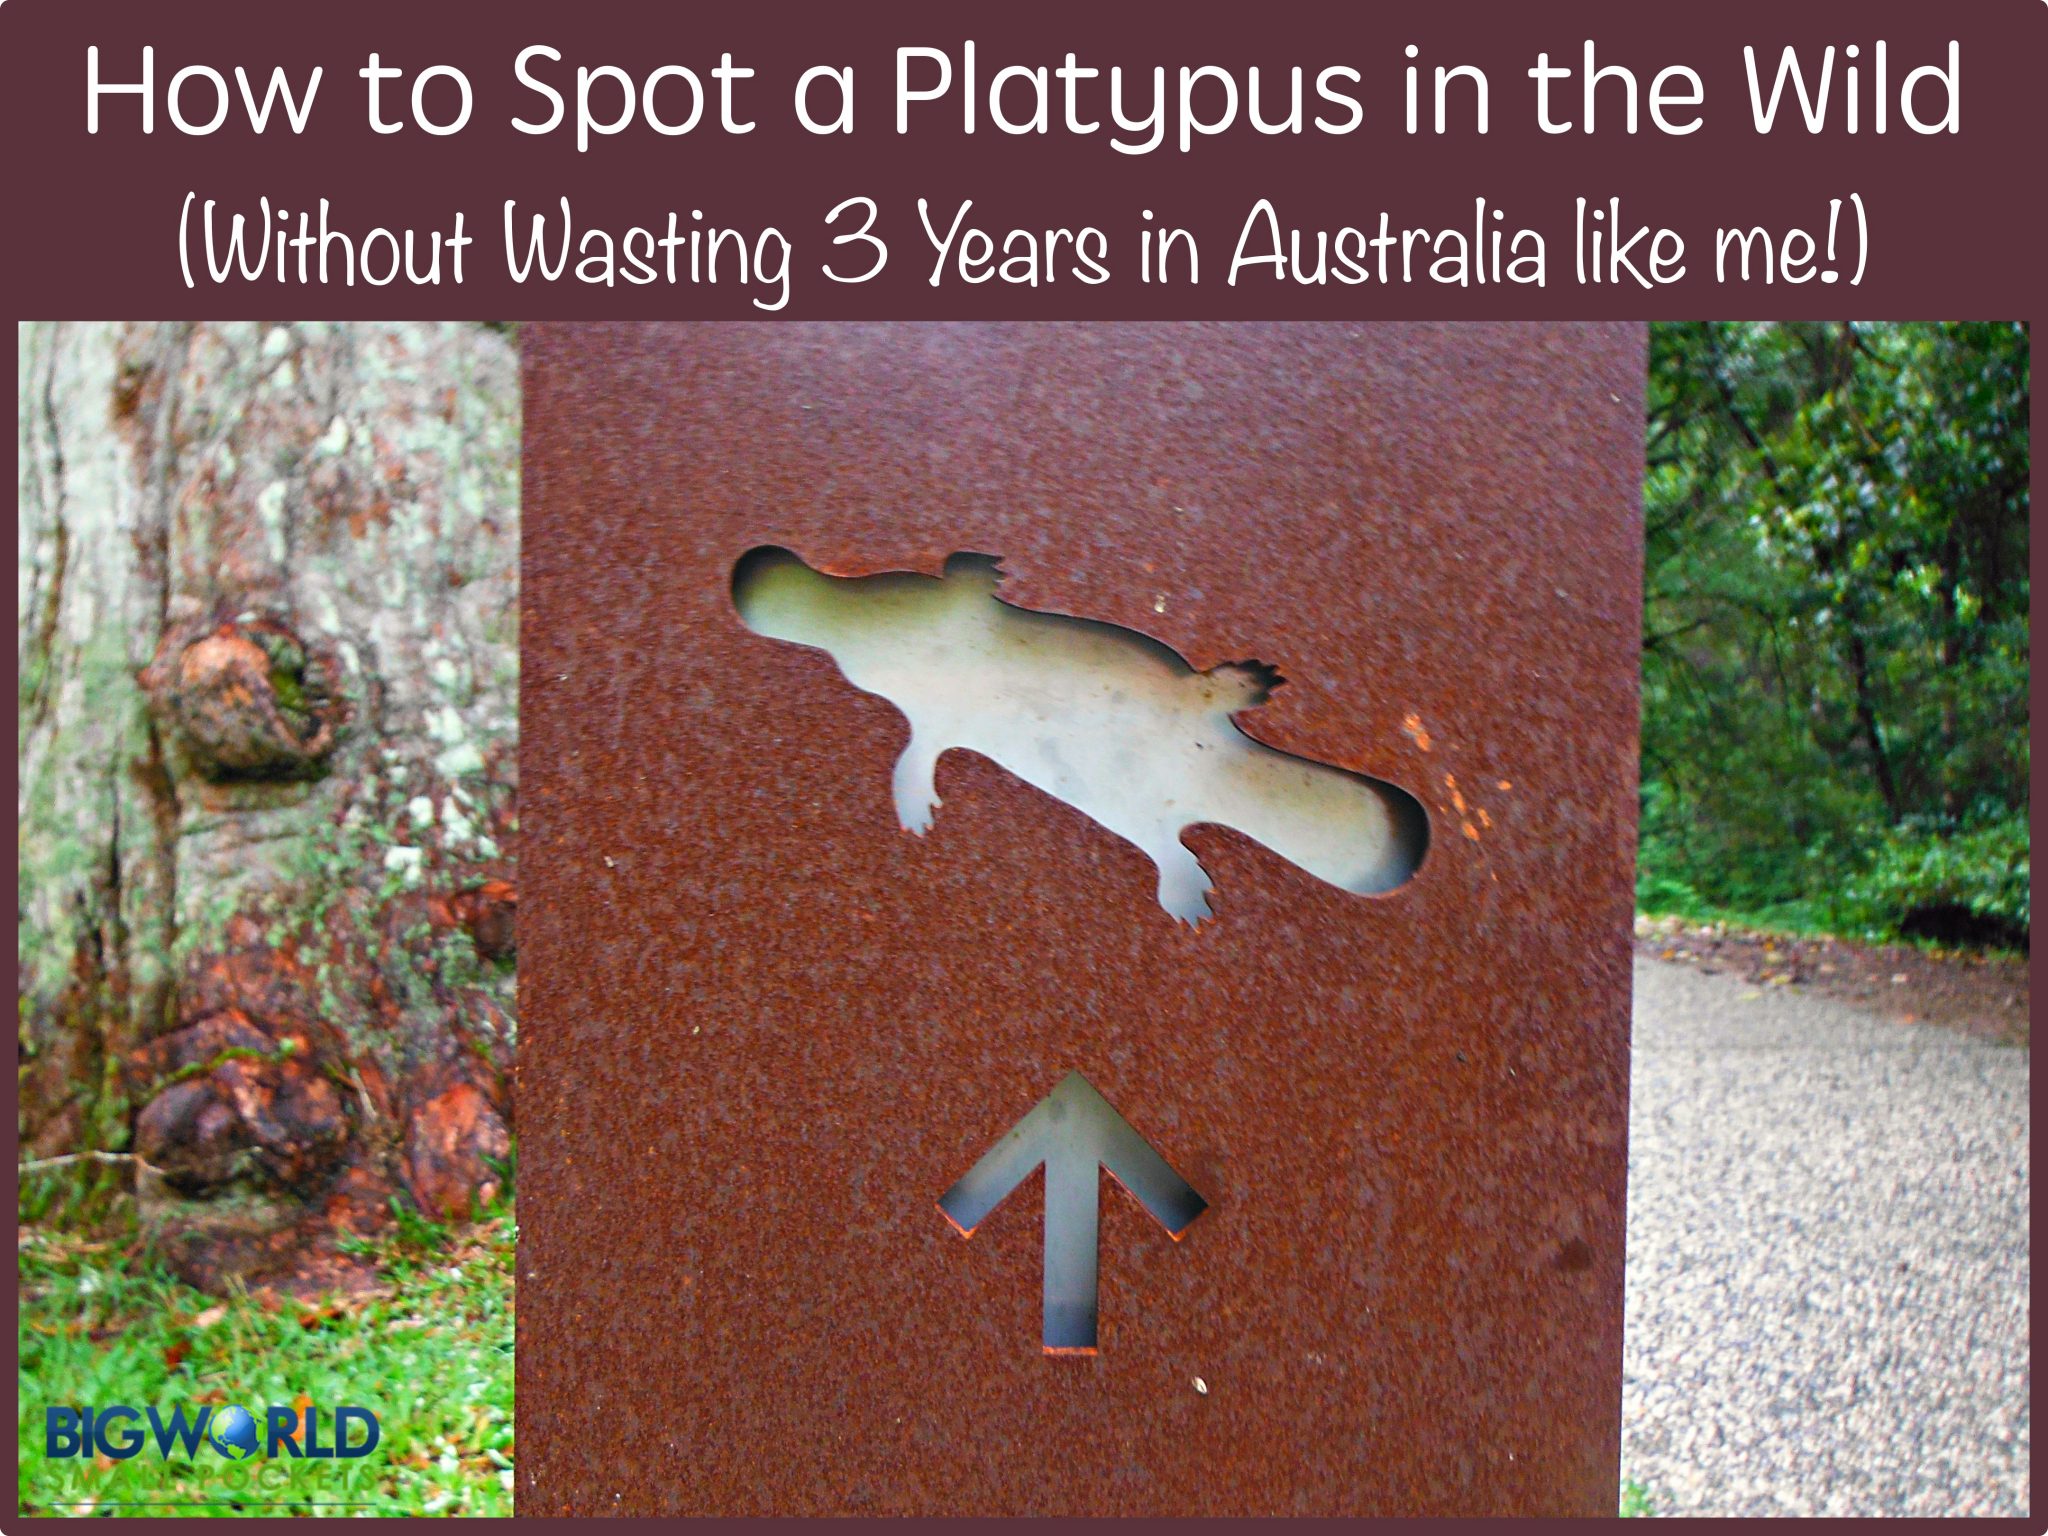 Platypus Spotting in Australia